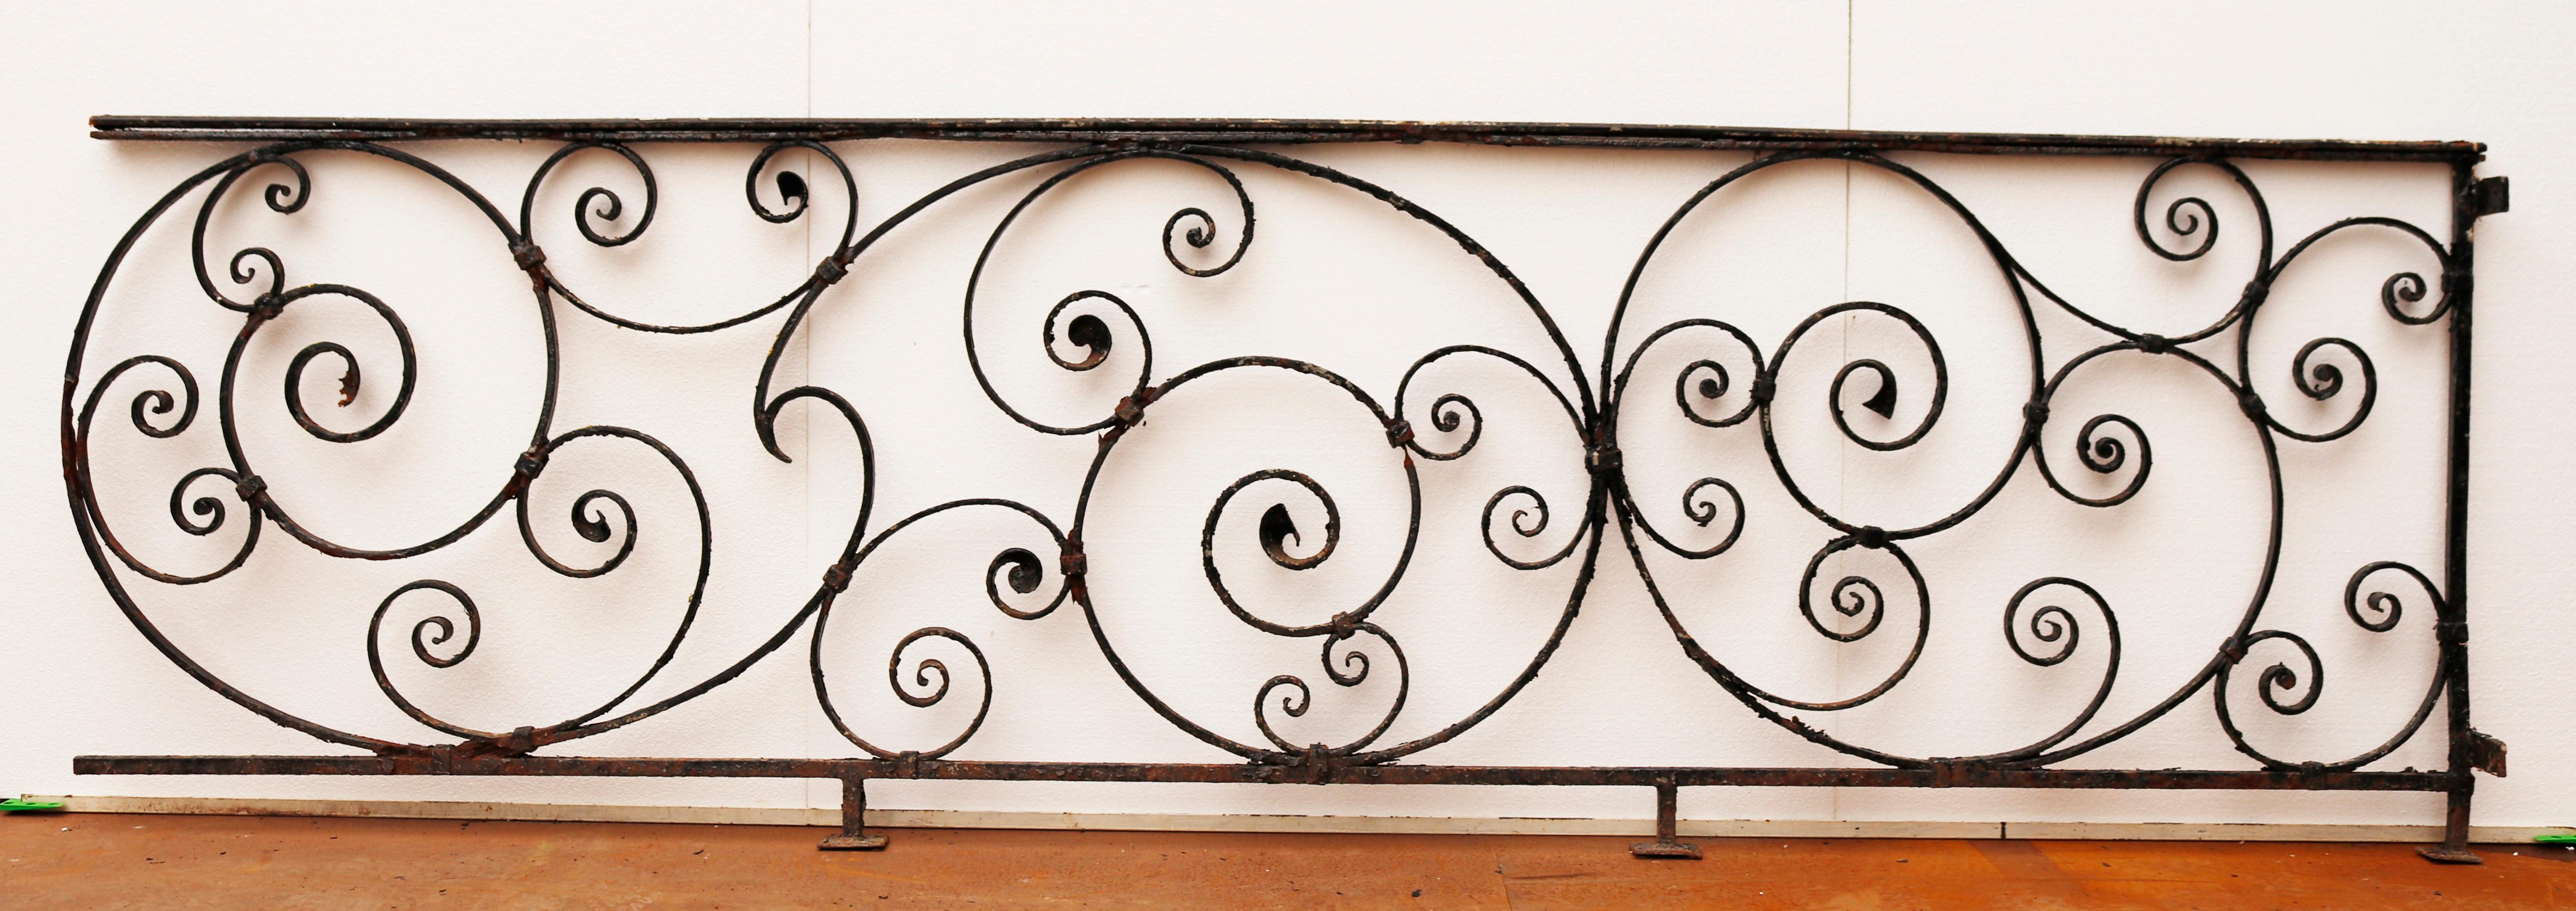 decorative wrought iron railings